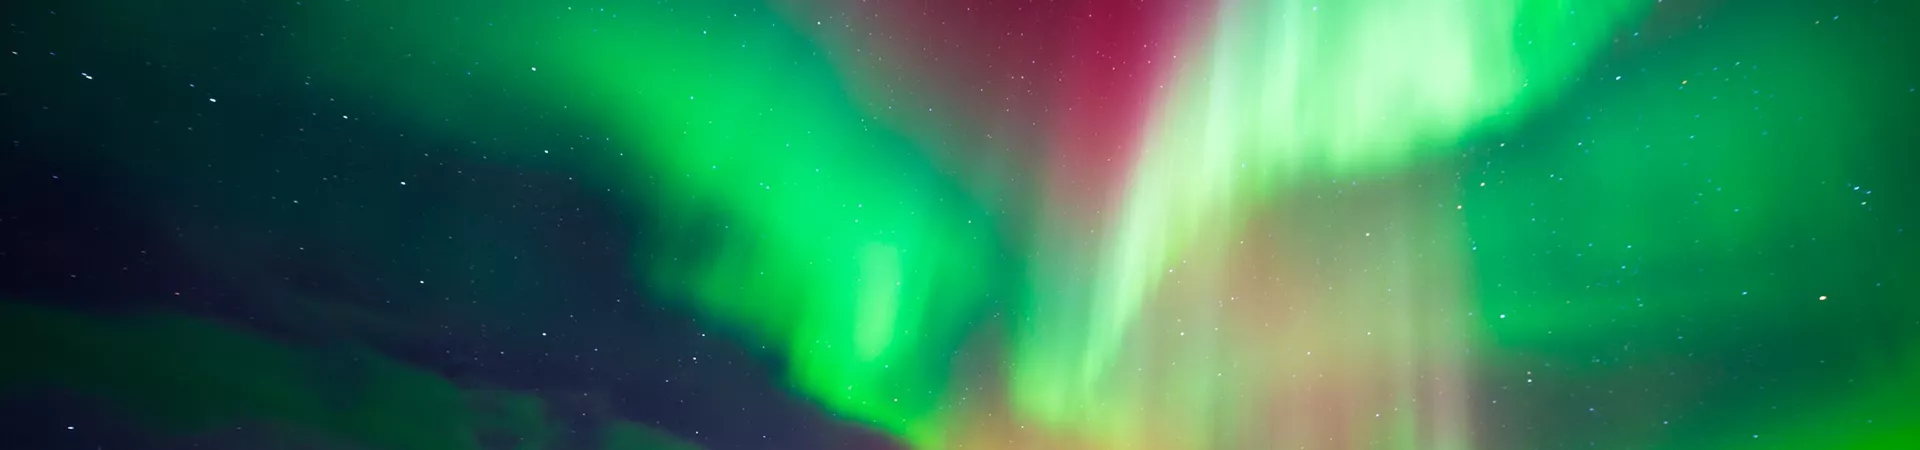 Aurora Borealis Or Northern Lights over Iceland